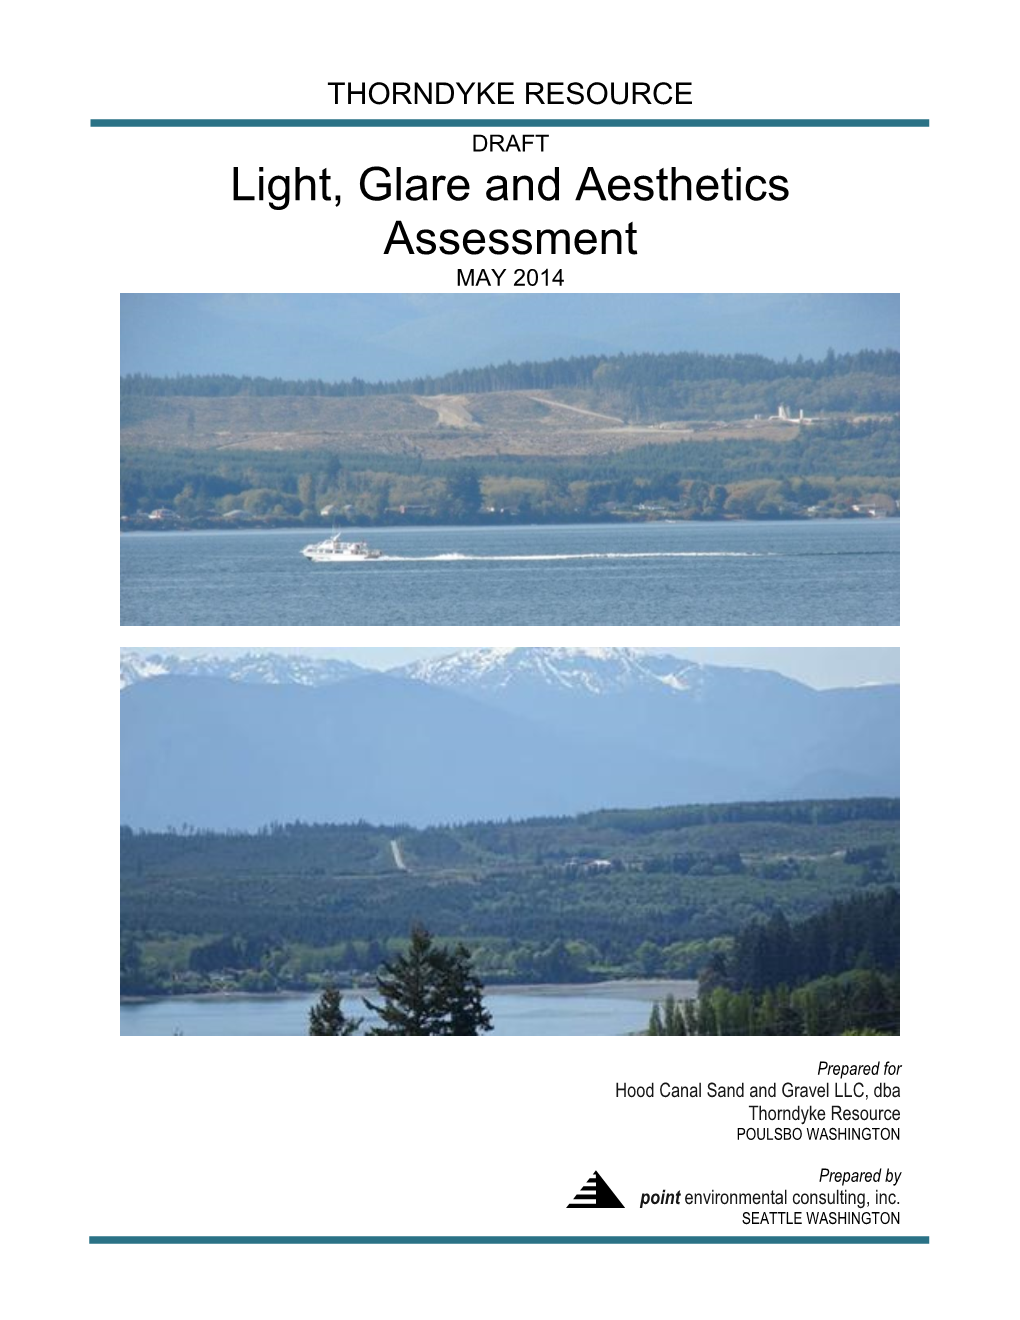 Light, Glare and Aesthetics Assessment MAY 2014